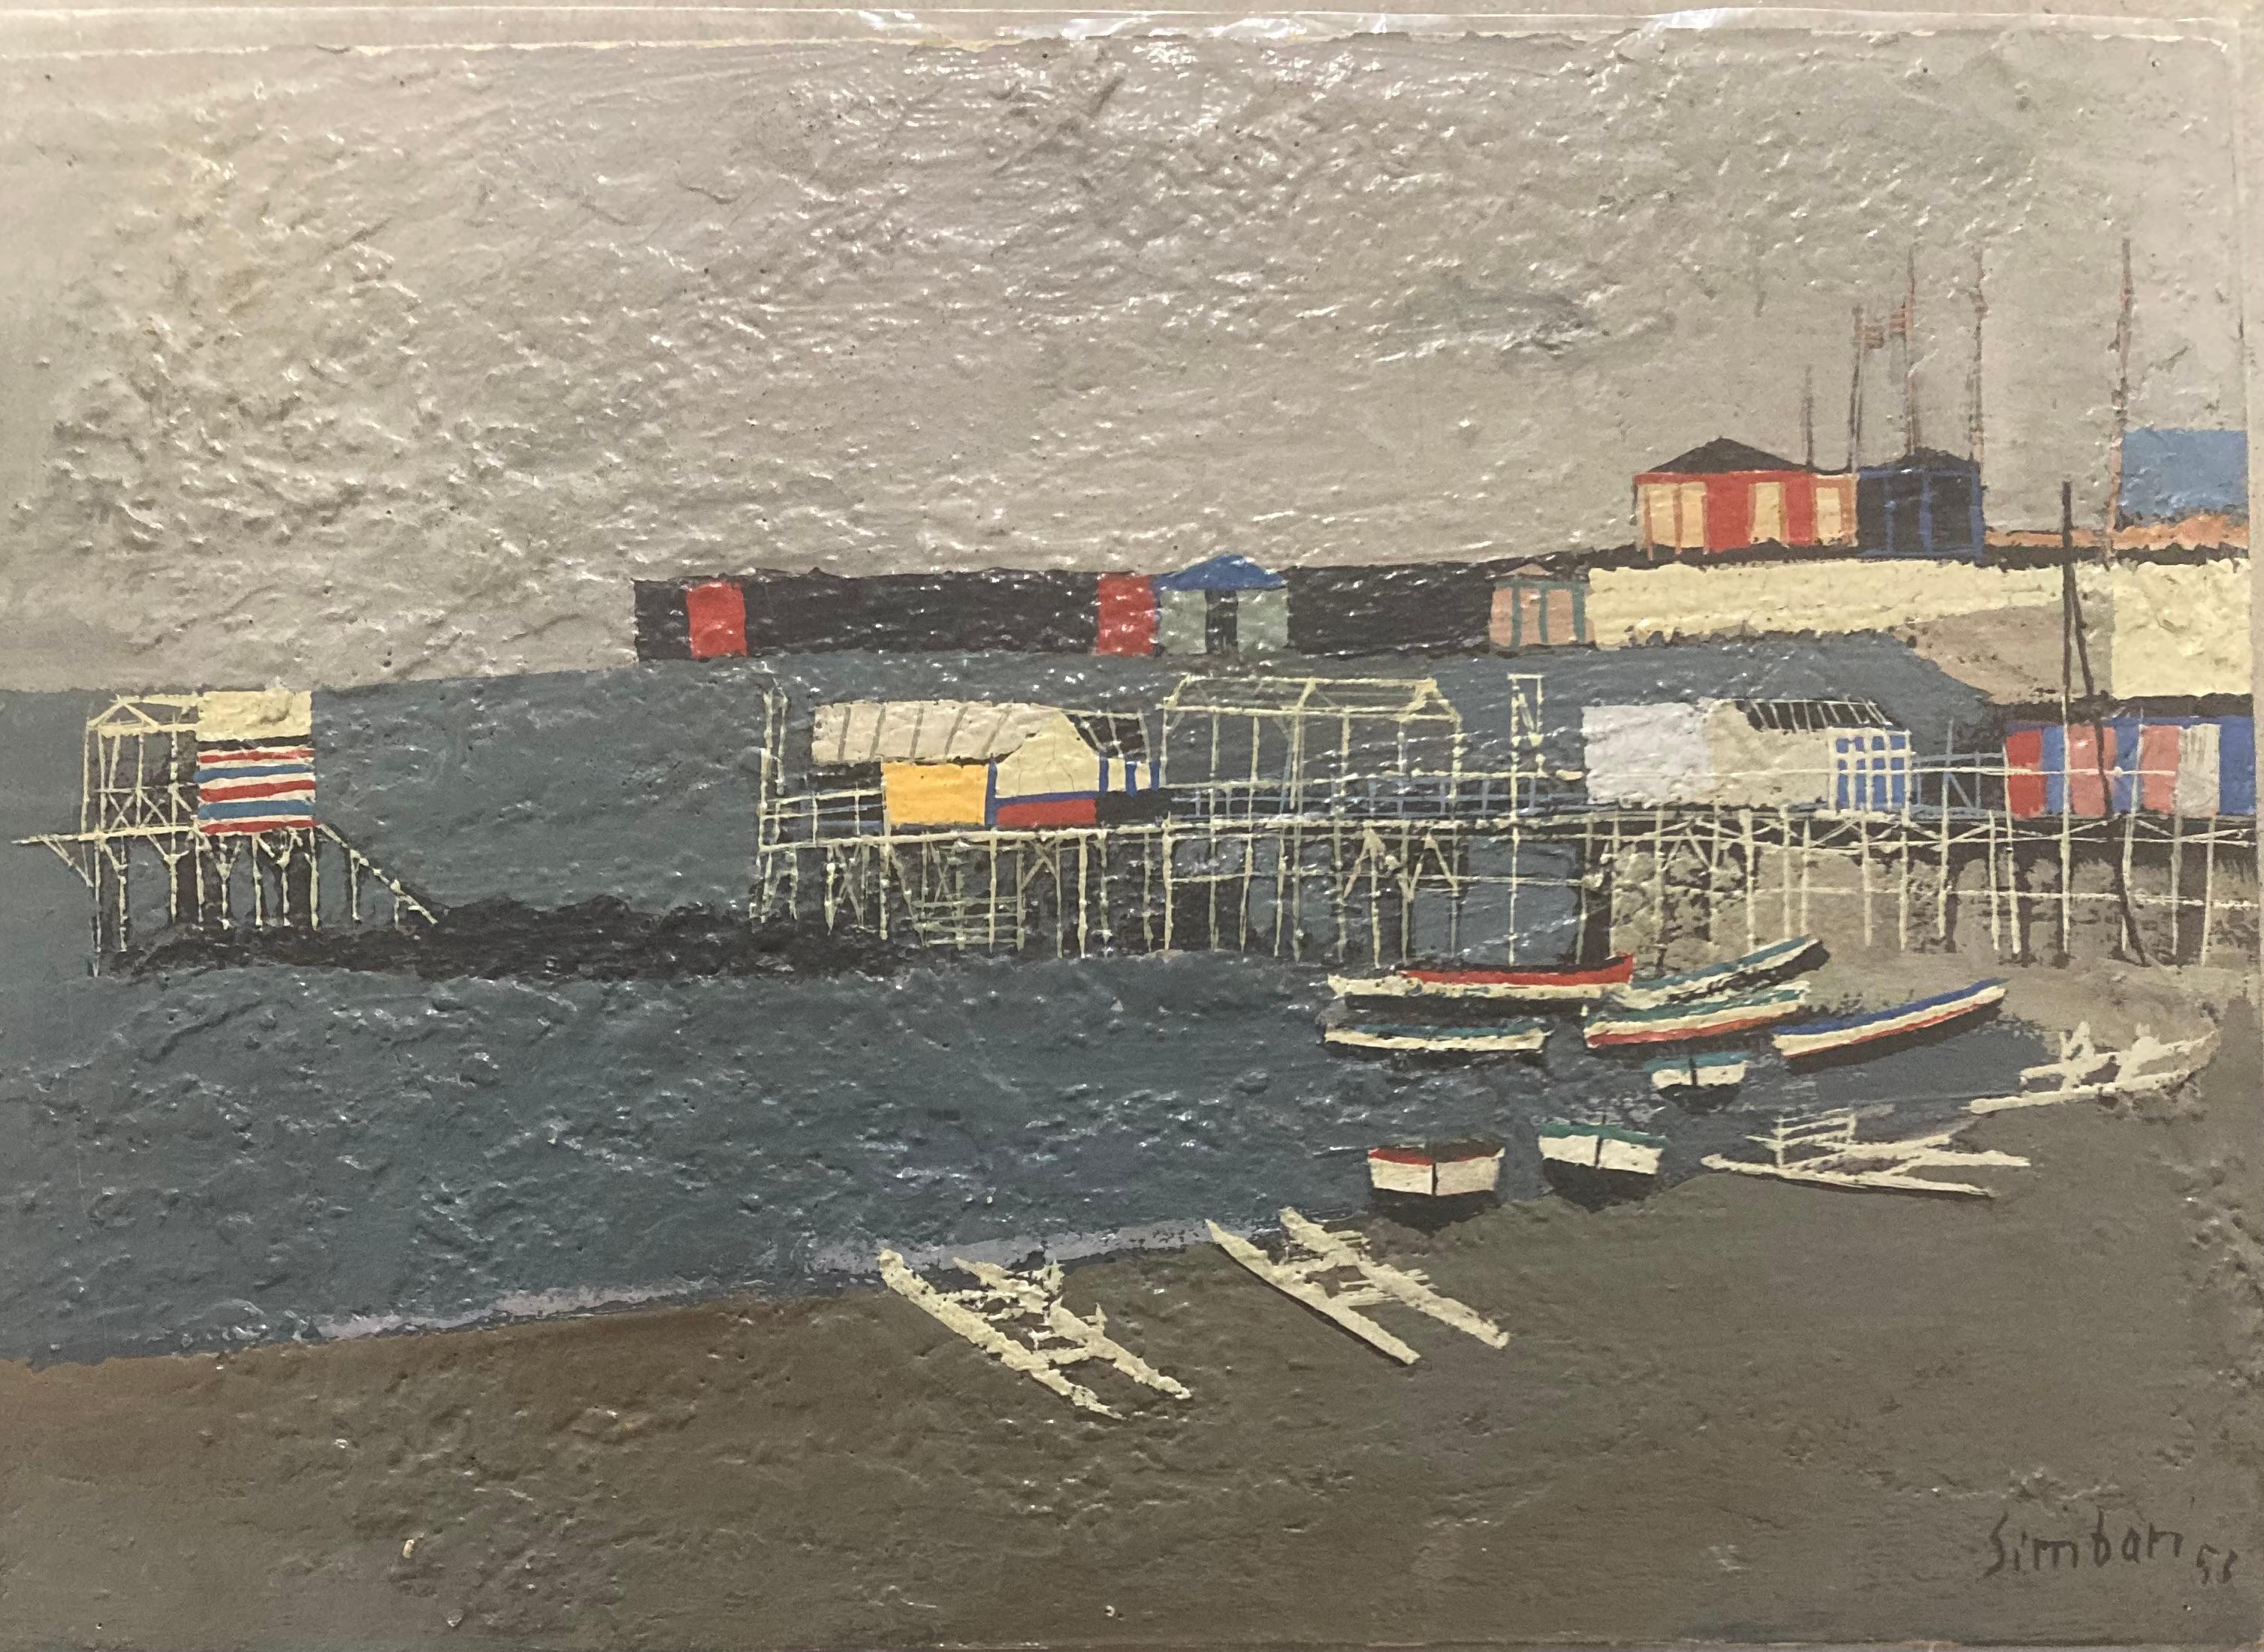 “Pier and boats” - Painting by Nicola Simbari